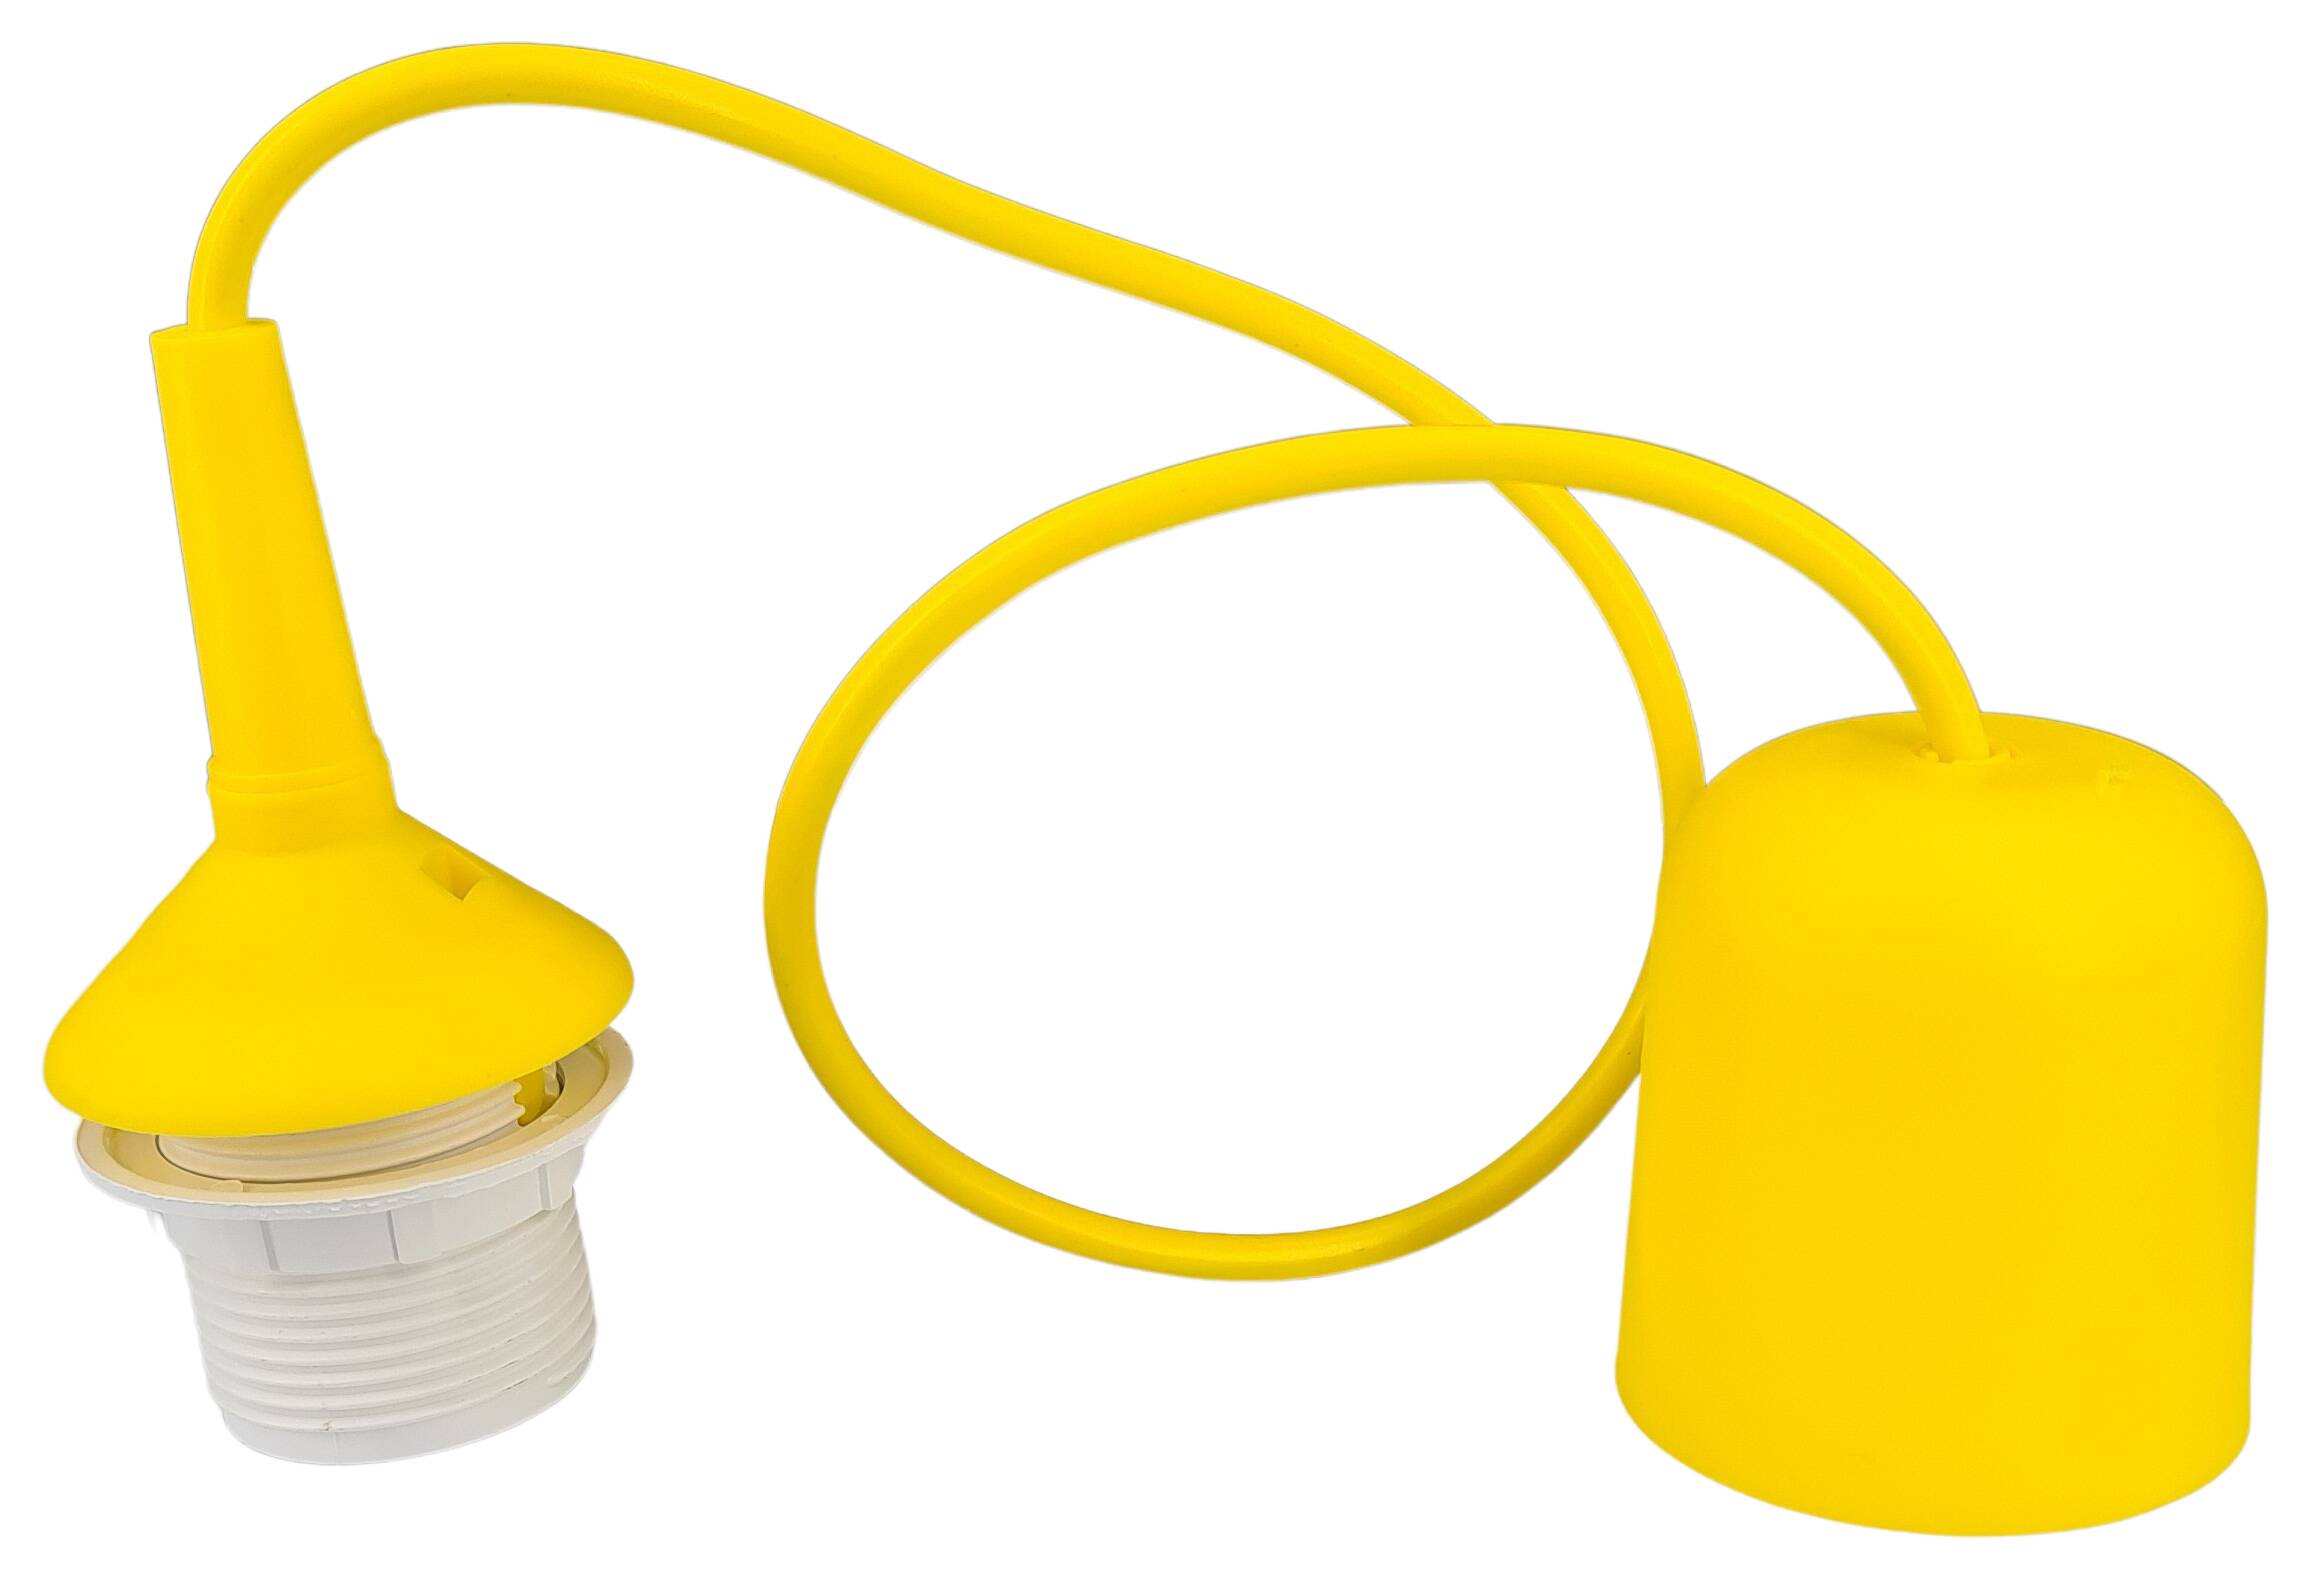 pendel 2x0,75 with mounted socket E27 70 cm long yellow